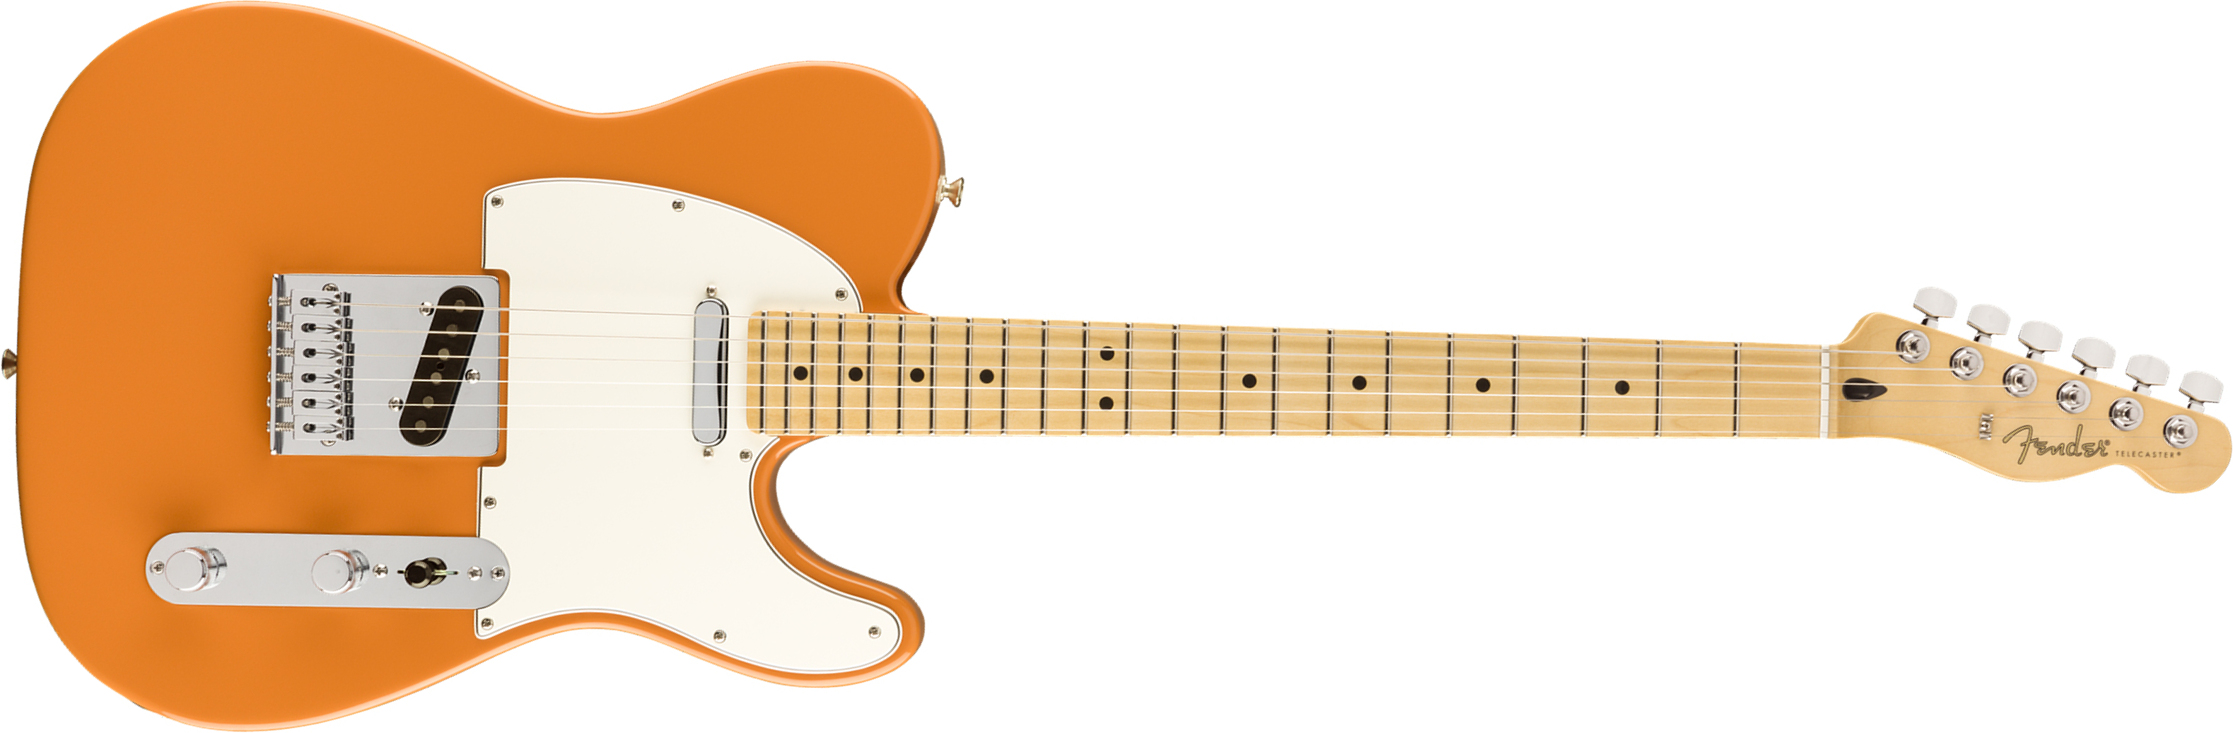 Fender Tele Player Mex Mn - Capri Orange - Televorm elektrische gitaar - Main picture